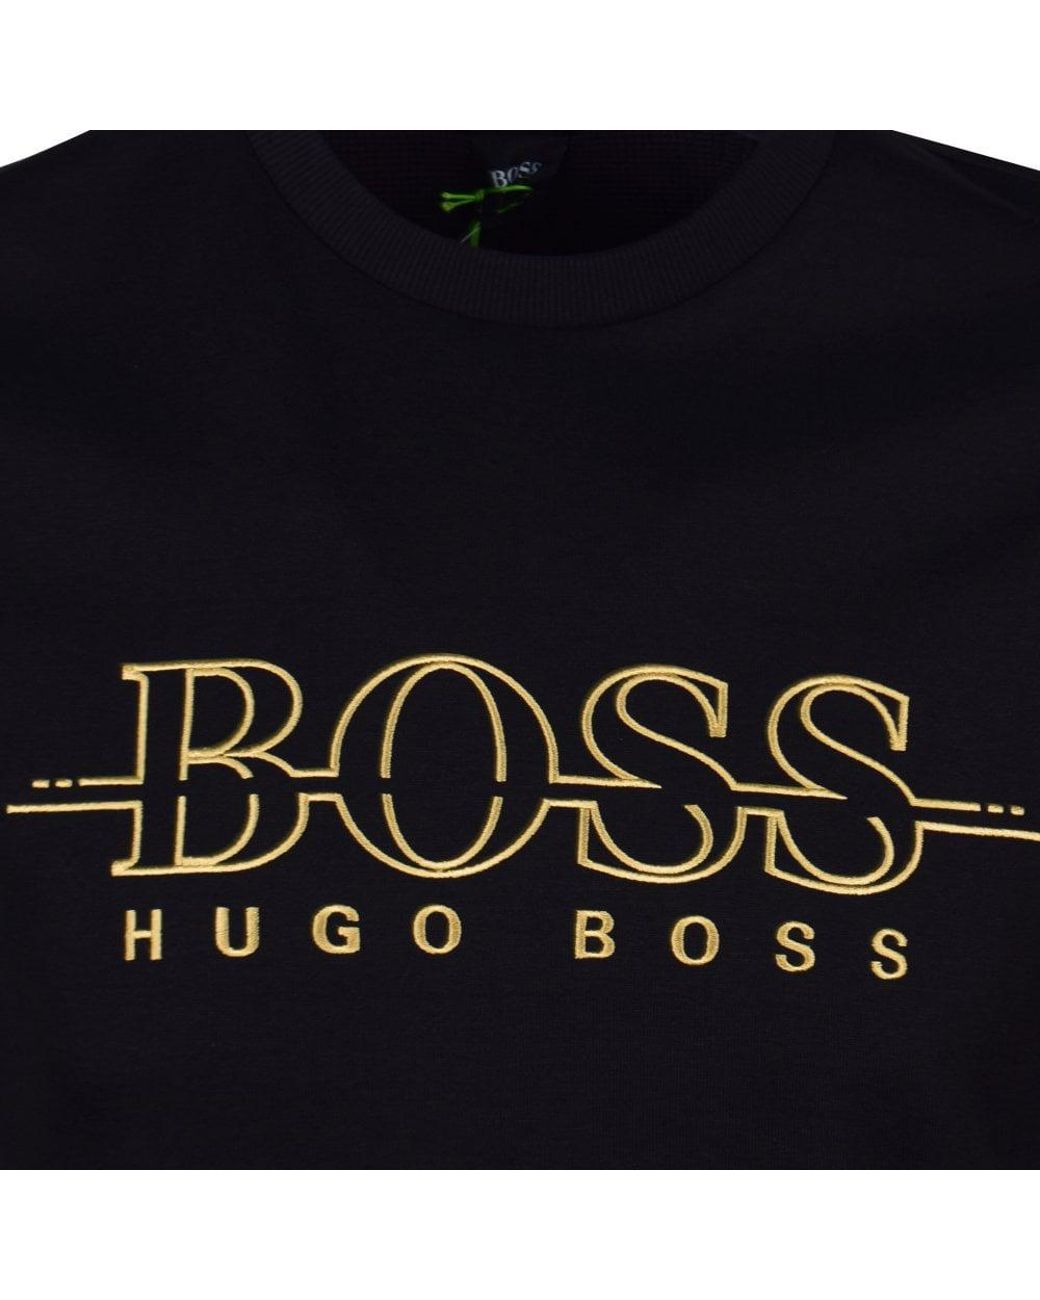 BOSS by HUGO BOSS Black/gold Logo Sweatshirt for Men | Lyst Canada